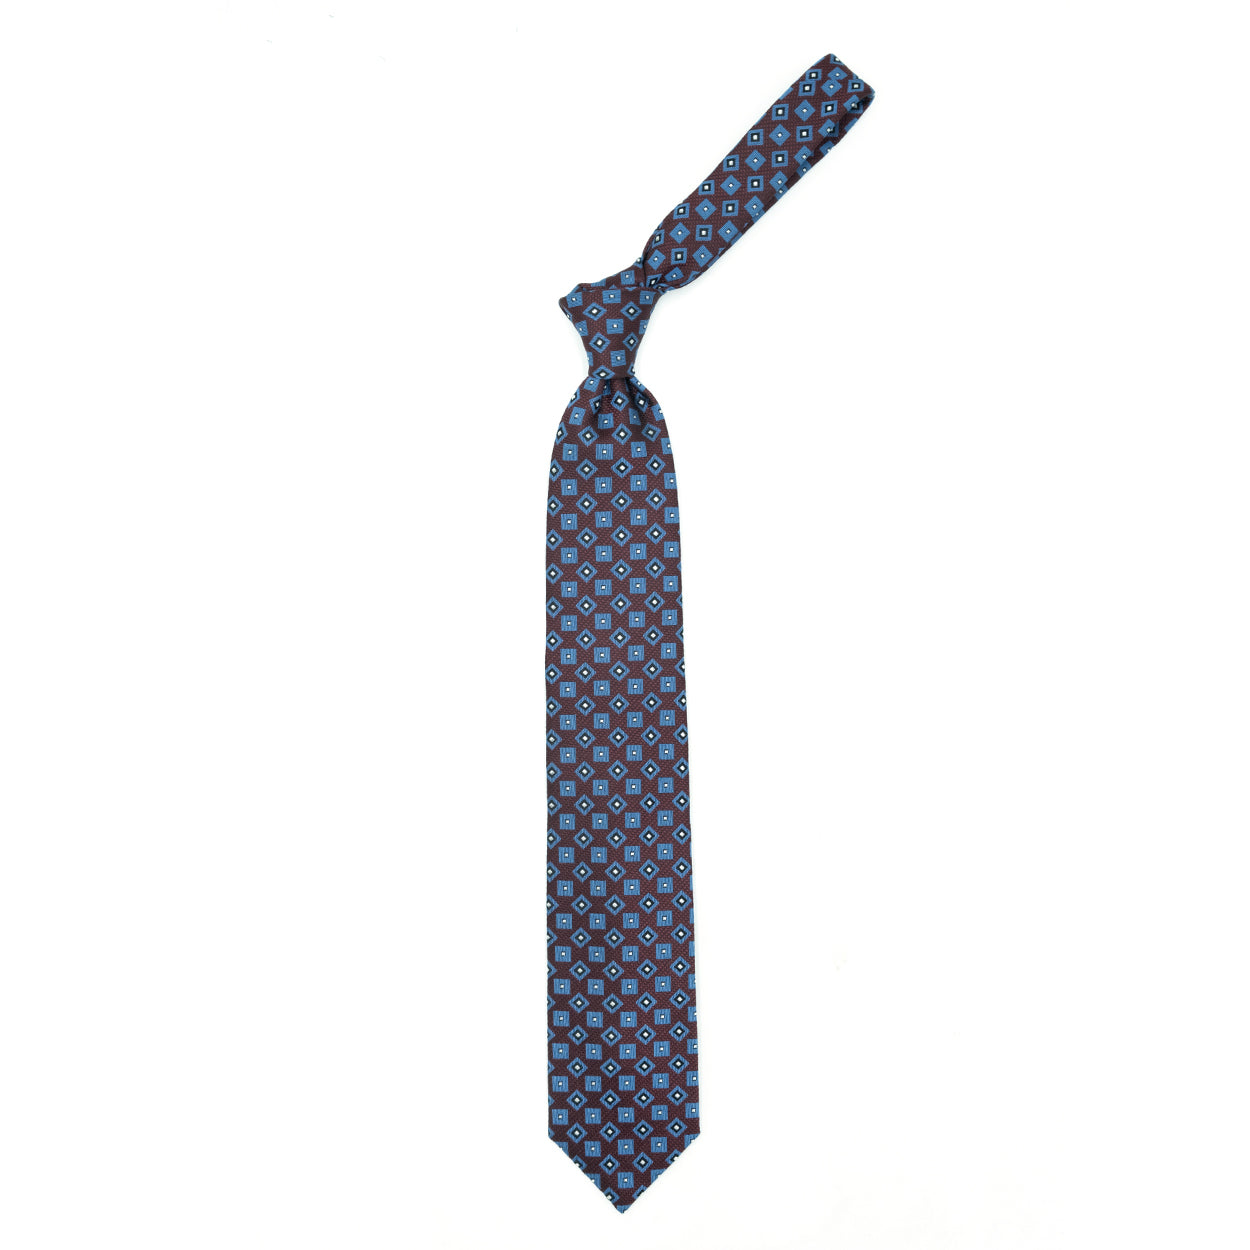 Cravatta bordeaux con quadrati azzurri